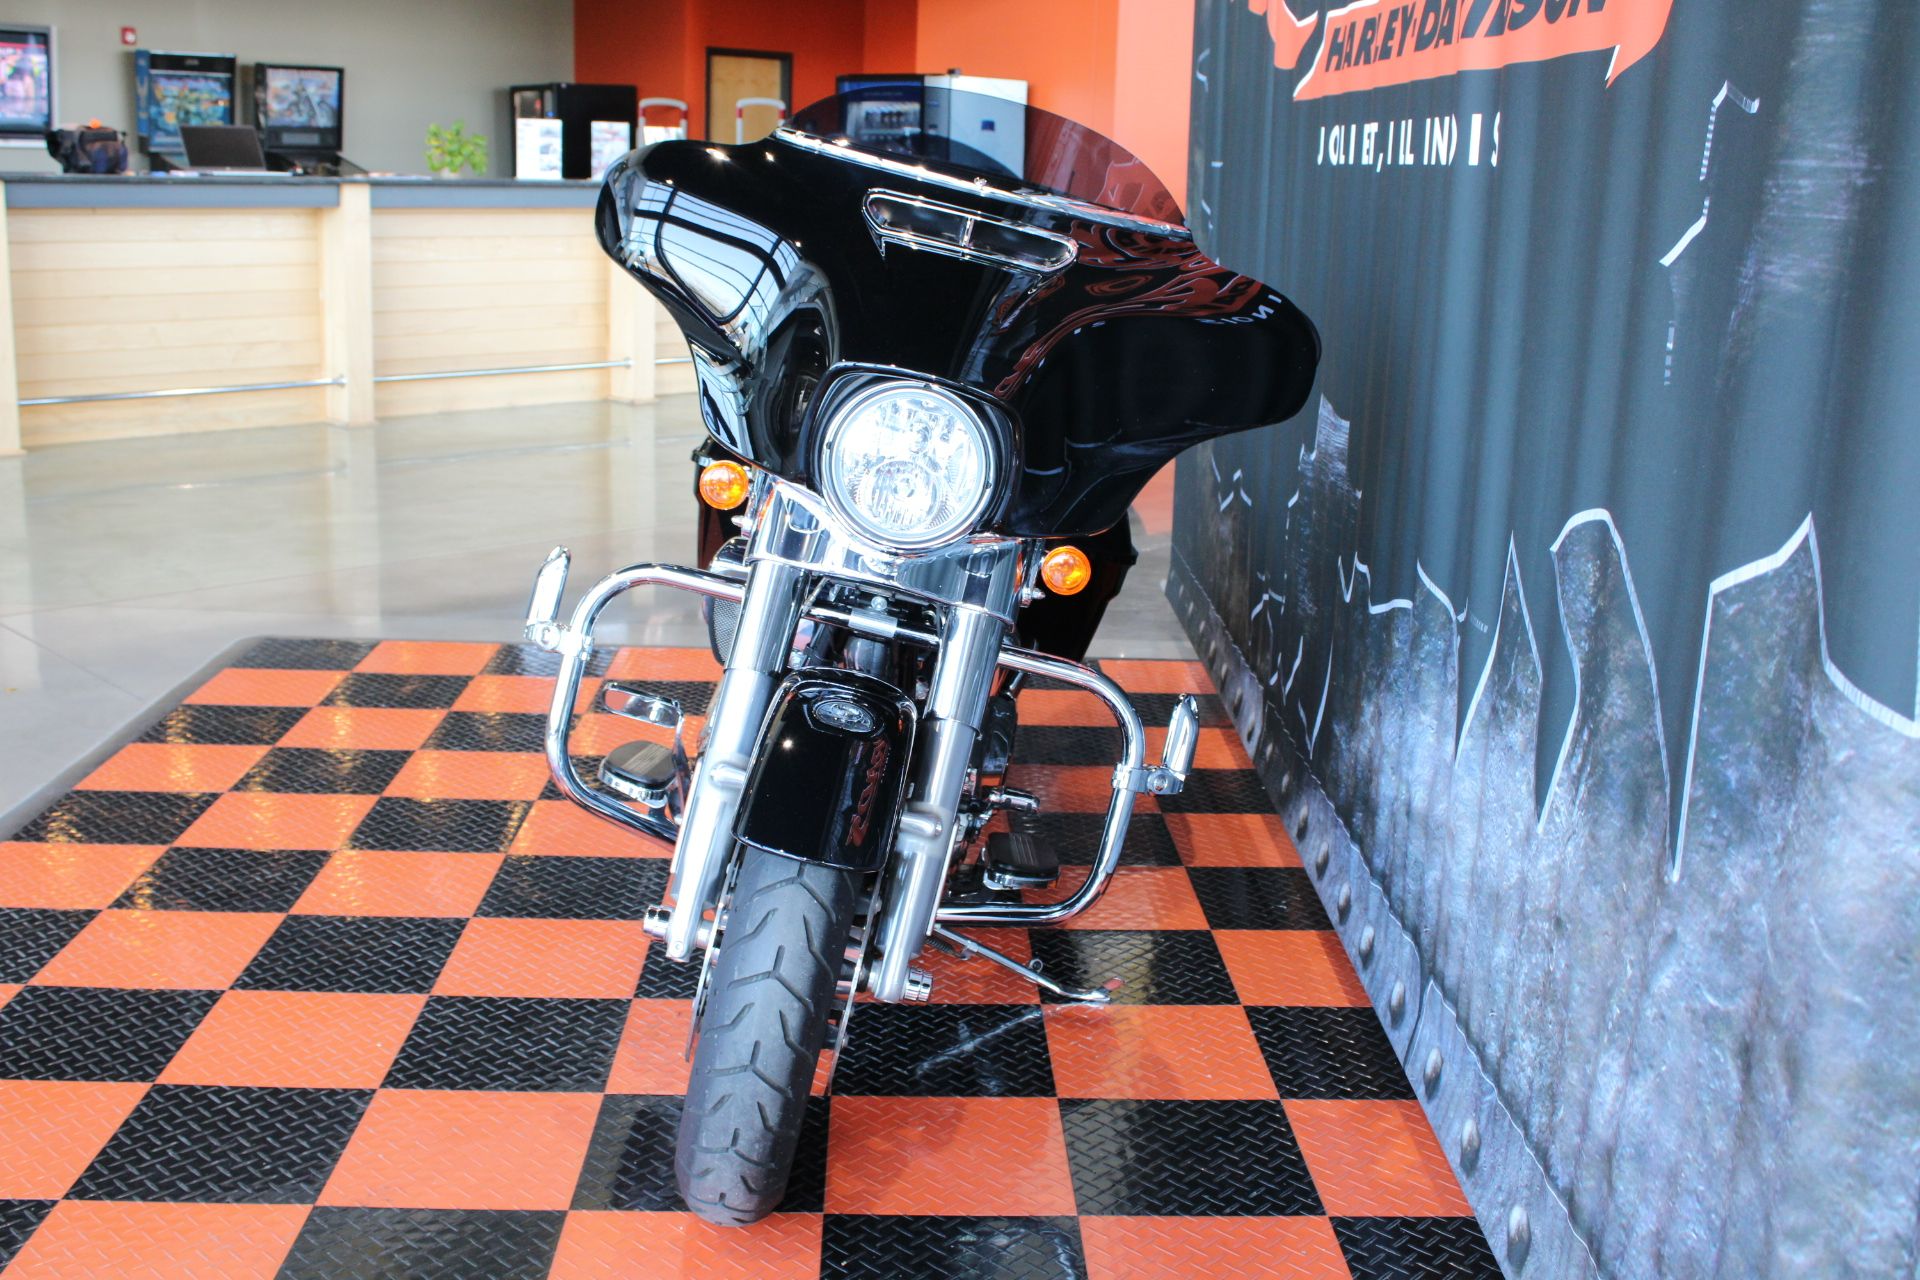 2020 Harley-Davidson Street Glide® in Shorewood, Illinois - Photo 20